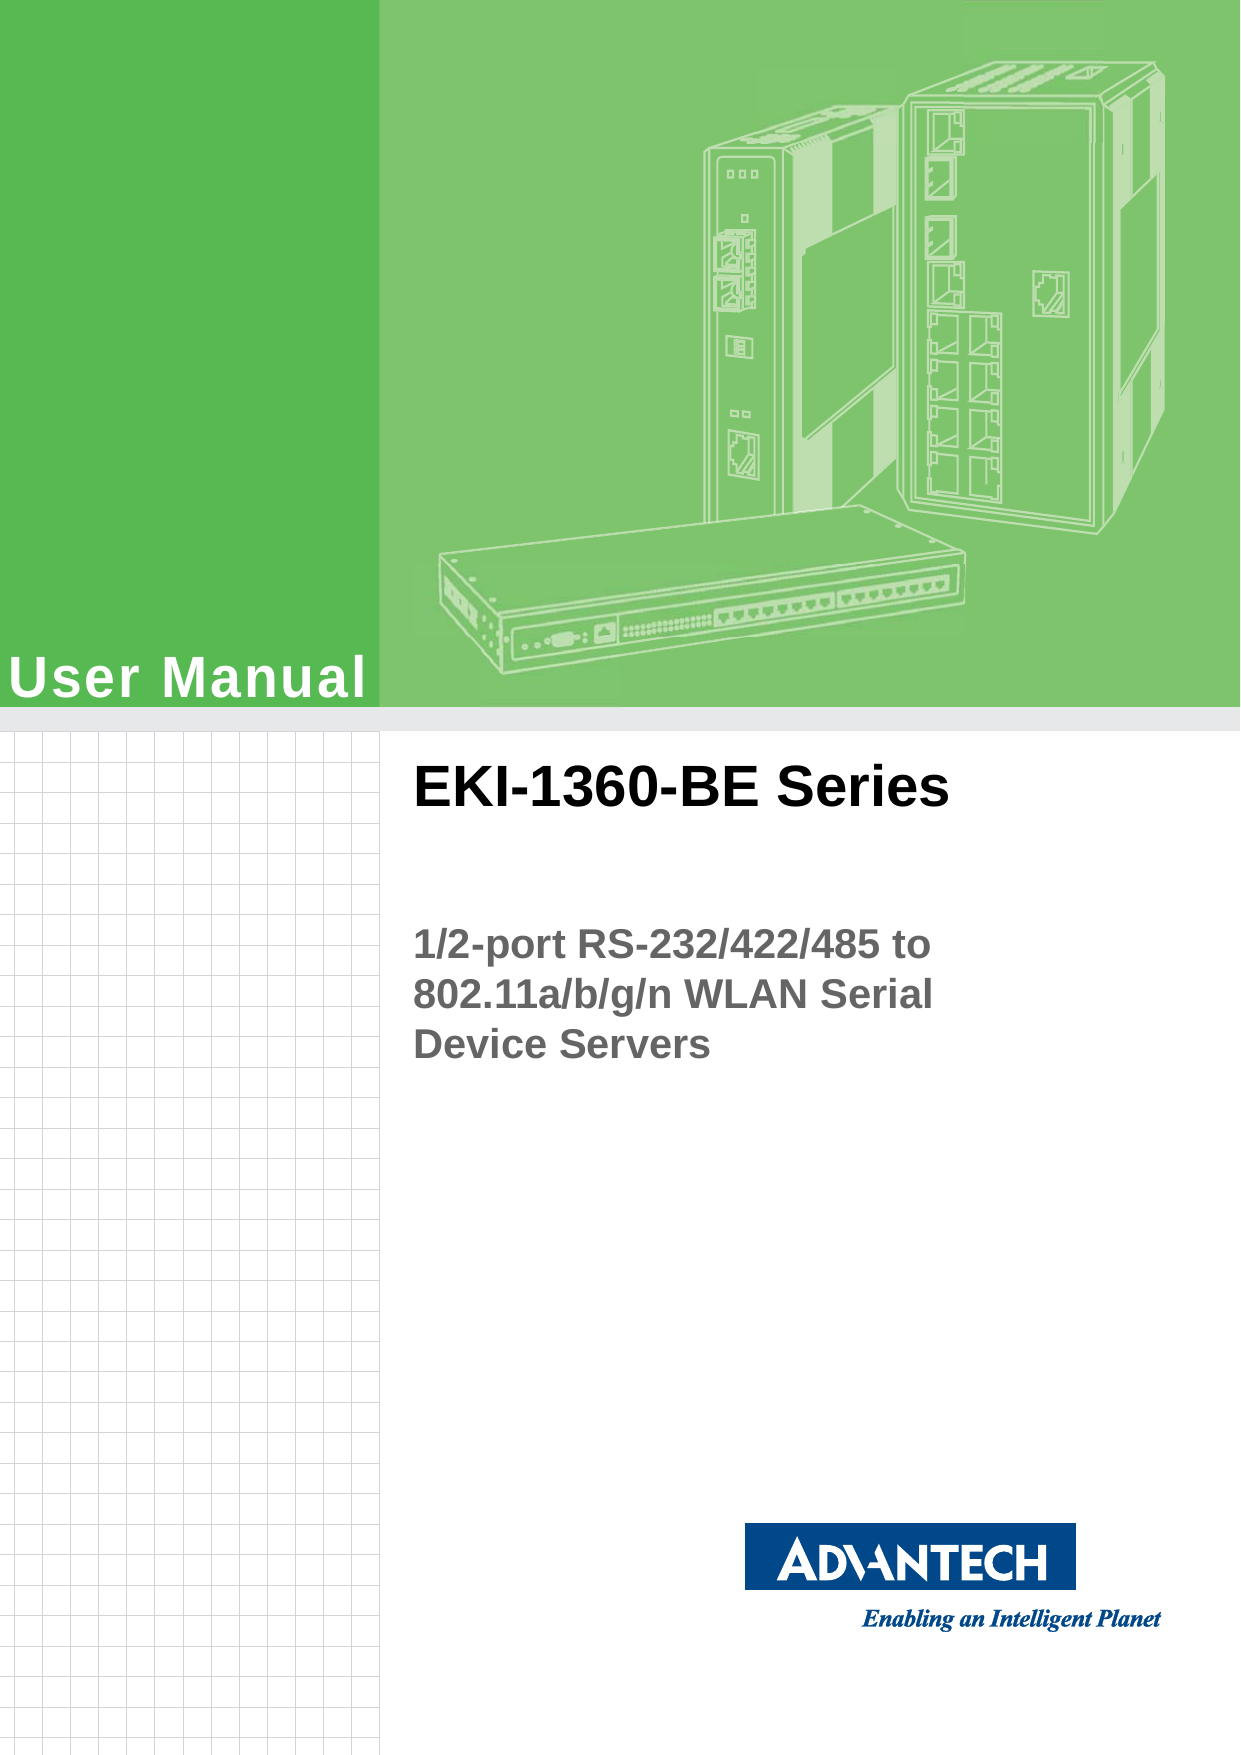 User ManualEKI-1360-BE Series1/2-port RS-232/422/485 to 802.11a/b/g/n WLAN Serial Device Servers